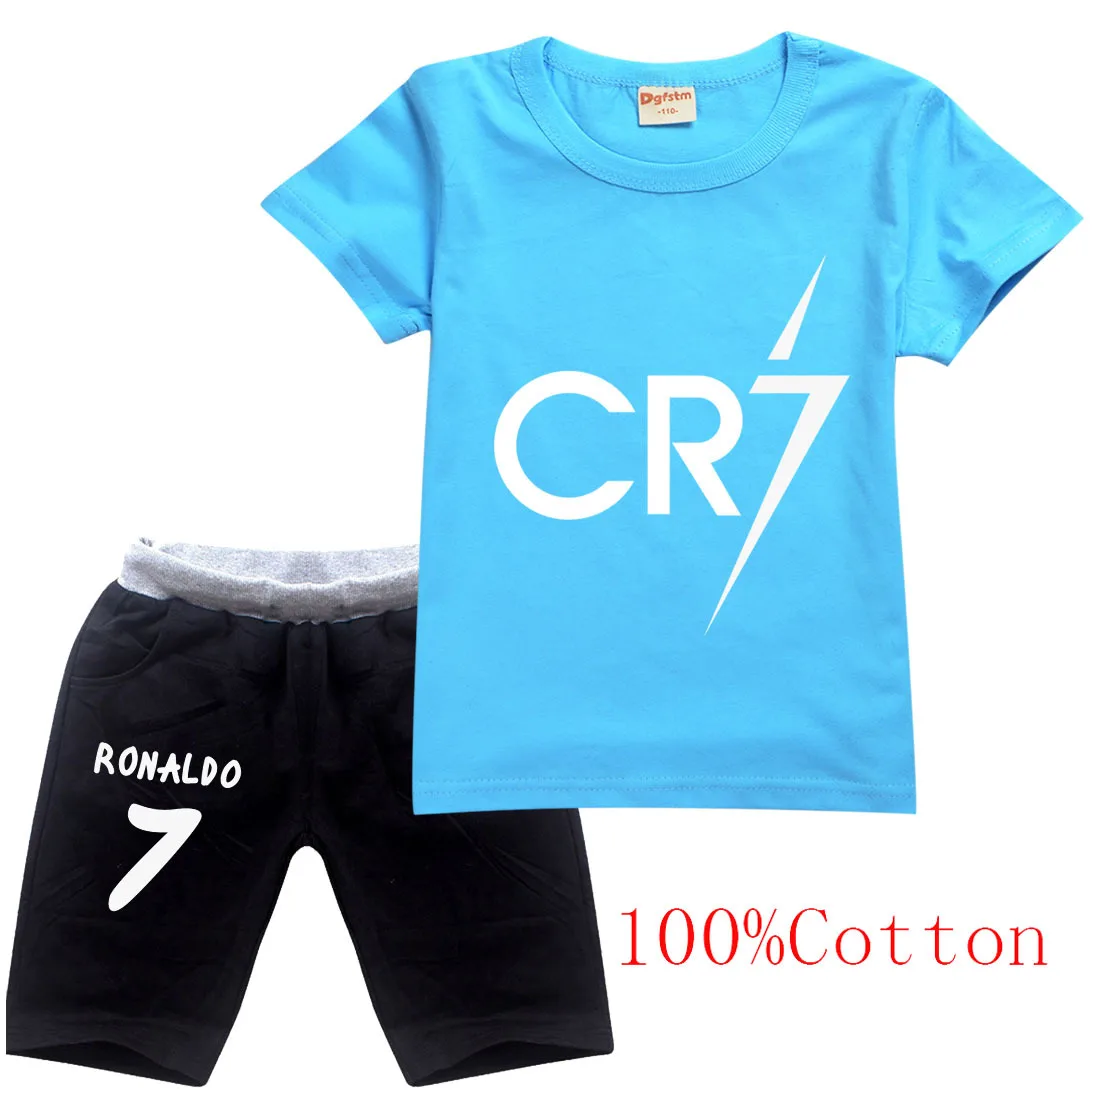 Cotton Summer Baby Children Soft Shorts Suit t-shirt Star Boy Girl kids Ronaldo CR7 cartoon infant clothes cheap stuff for 2-15Y |